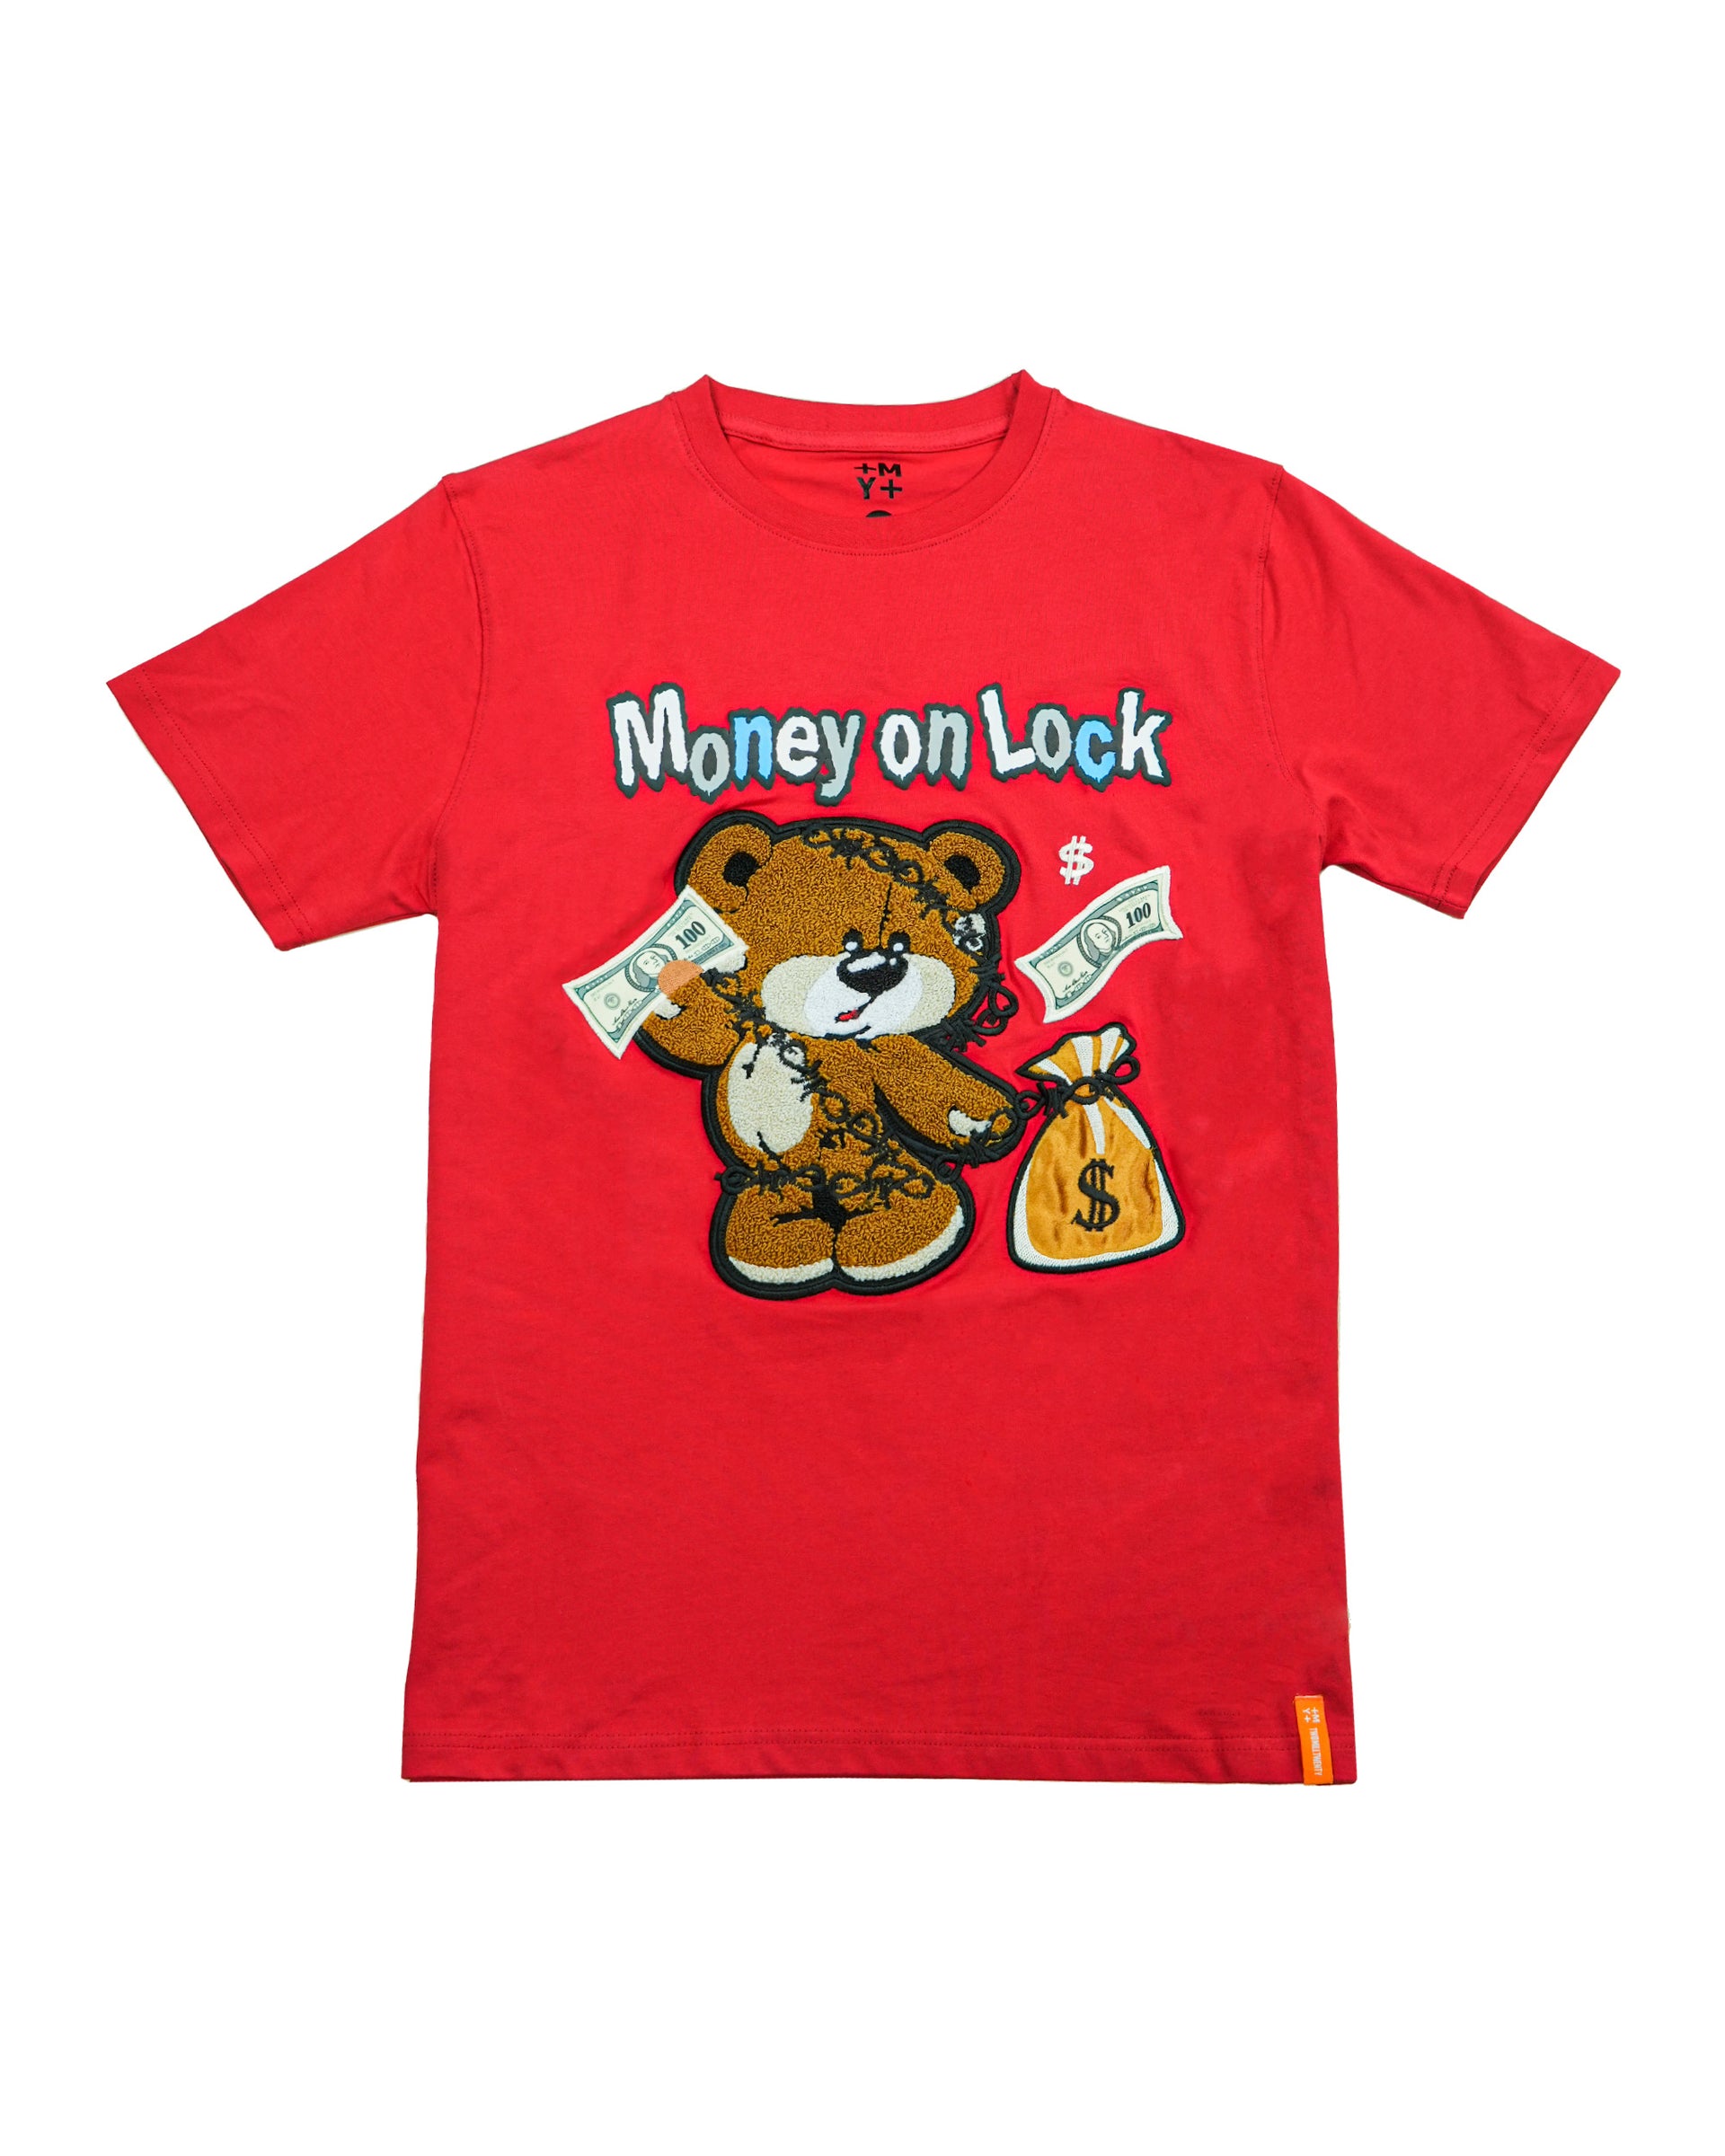 Men's "Money on Lock" Graphic T-Shirt | Red